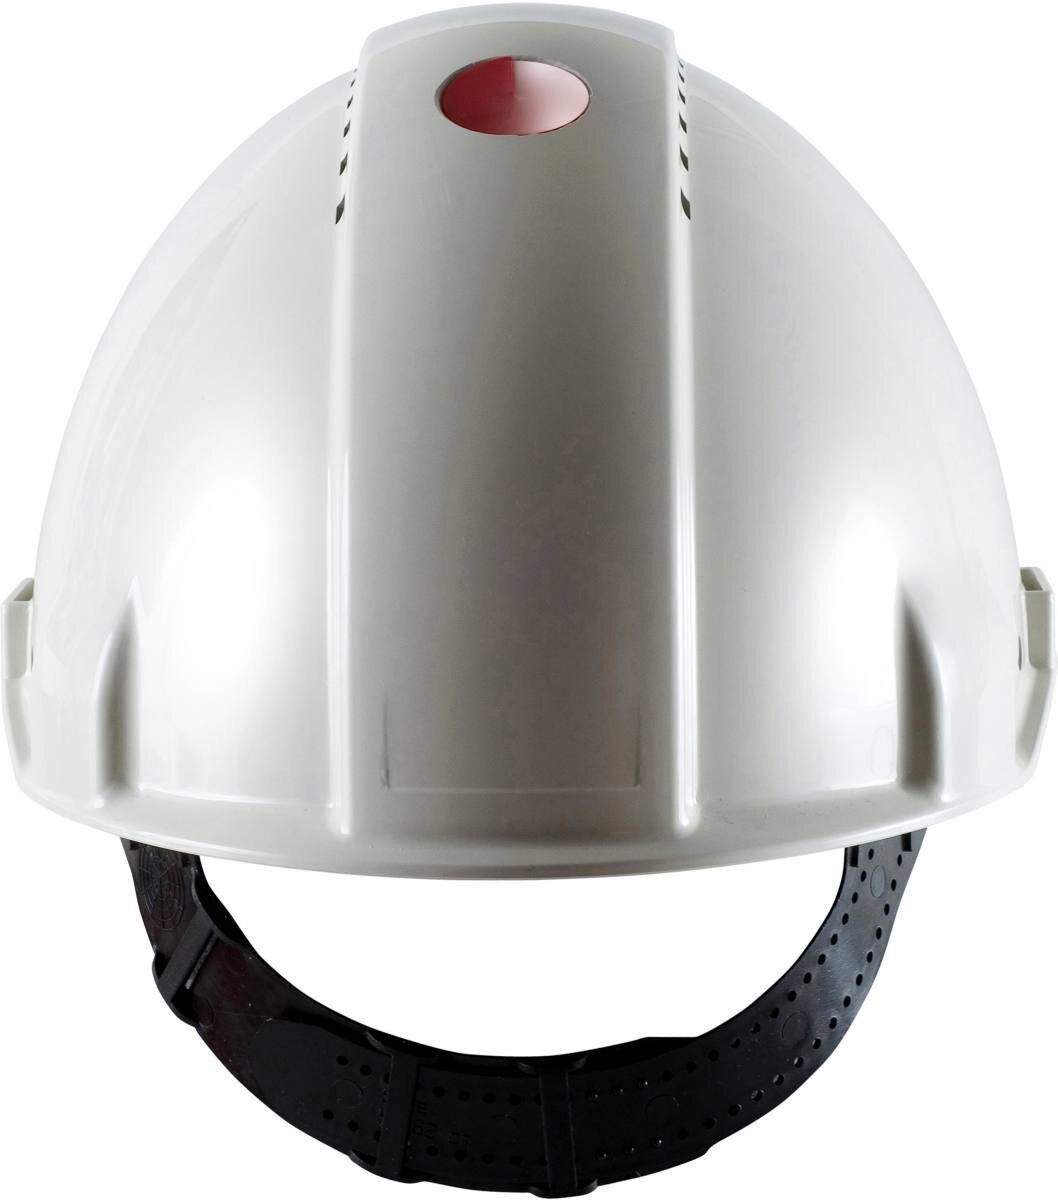 3M Safety helmet, Uvicator, pinlock fastener, non-ventilated, dielectric 440 V, plastic welding tape, white, G3001CUV-VI